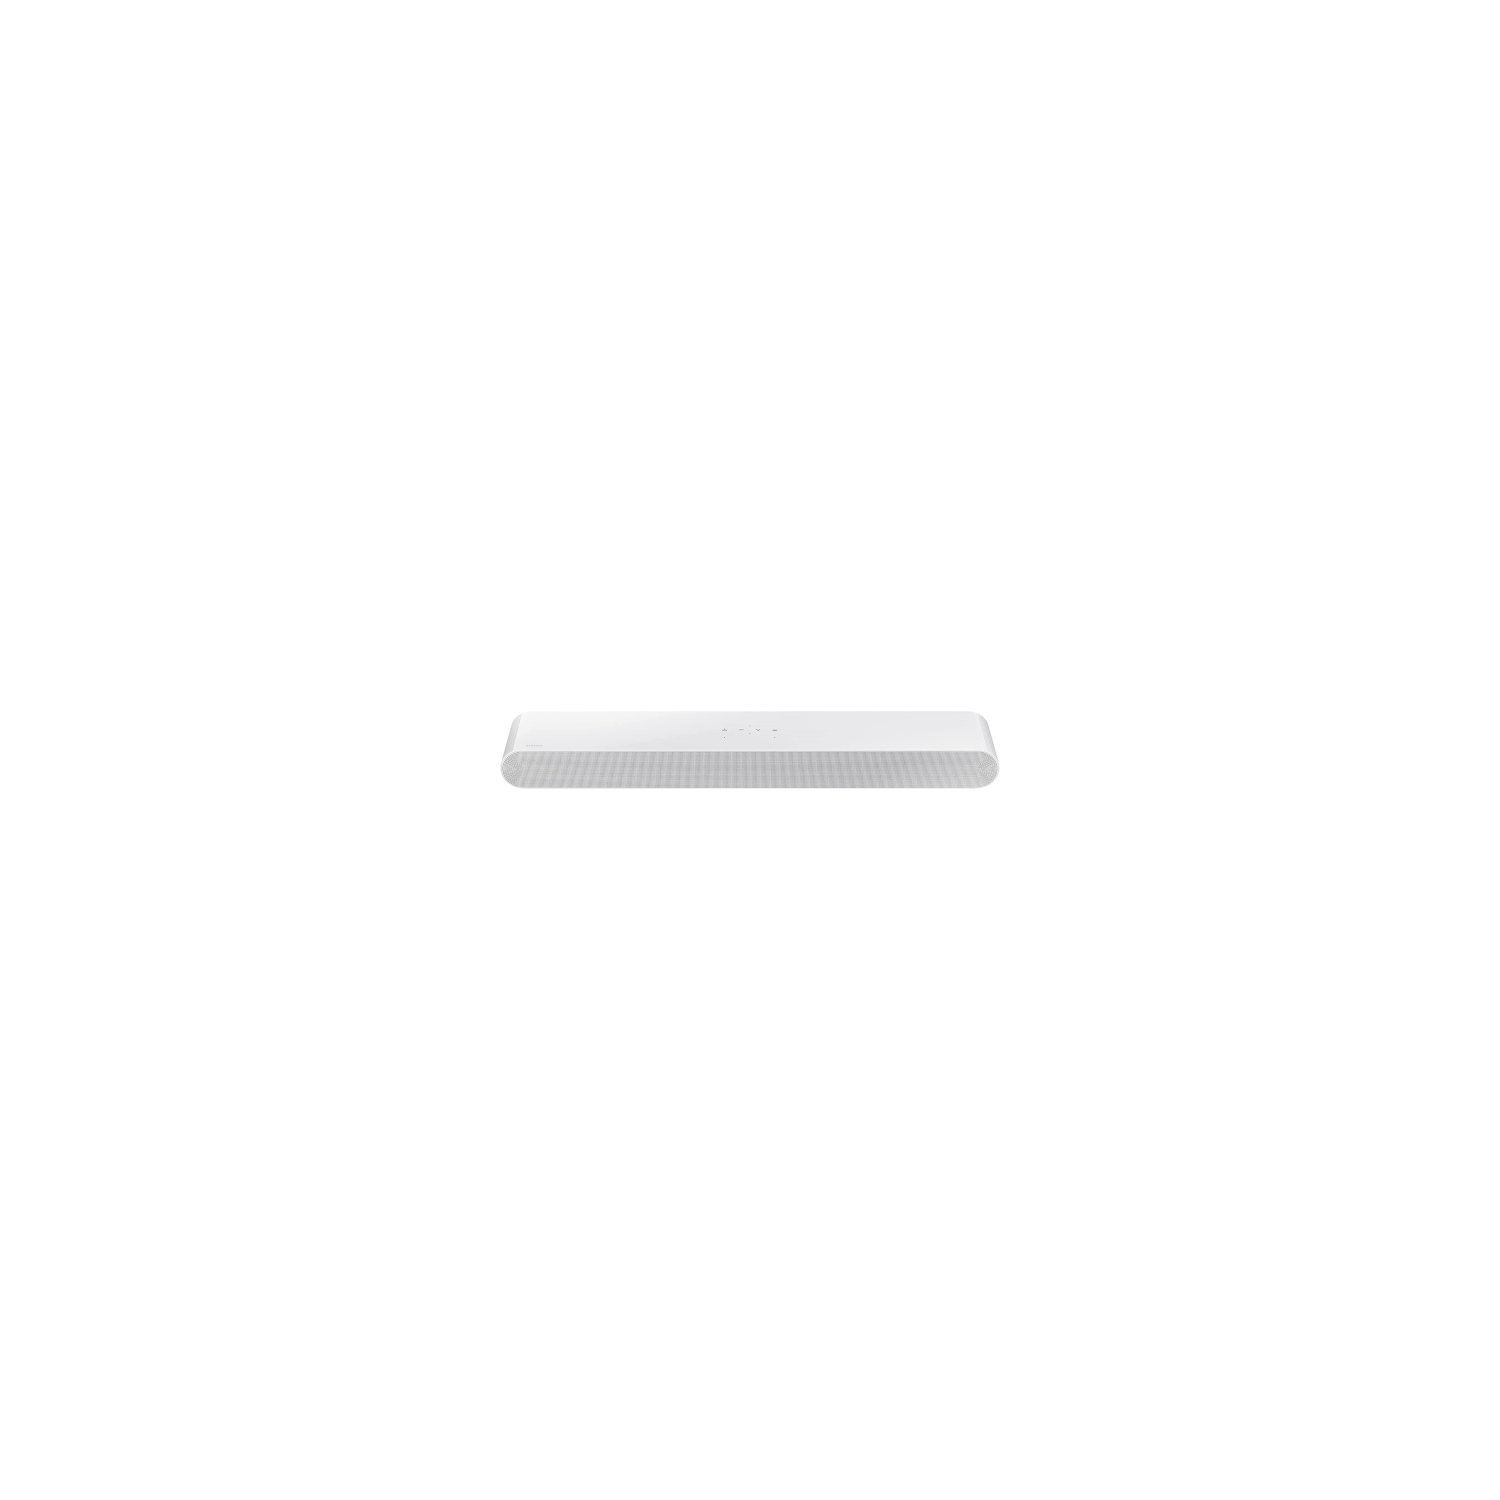 Open Box 10/10 - Samsung S-Series All-in-one Soundbar - HW-S61B - White